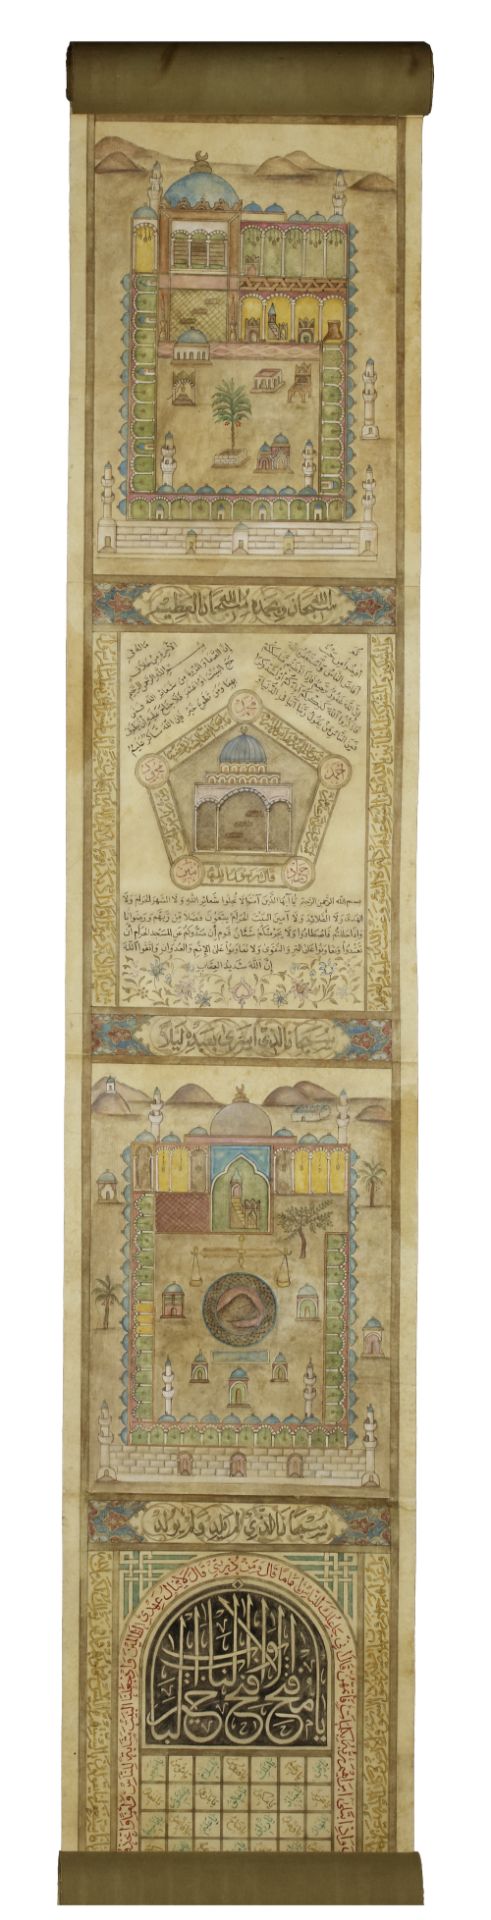 AN OTTOMAN ILLUMINATED HAJJ SCROLL, WRITTEN BY ISMAEL AHMED IN MECCA, DATED DHU HIJJA 1231 AH/1816 A - Image 9 of 12